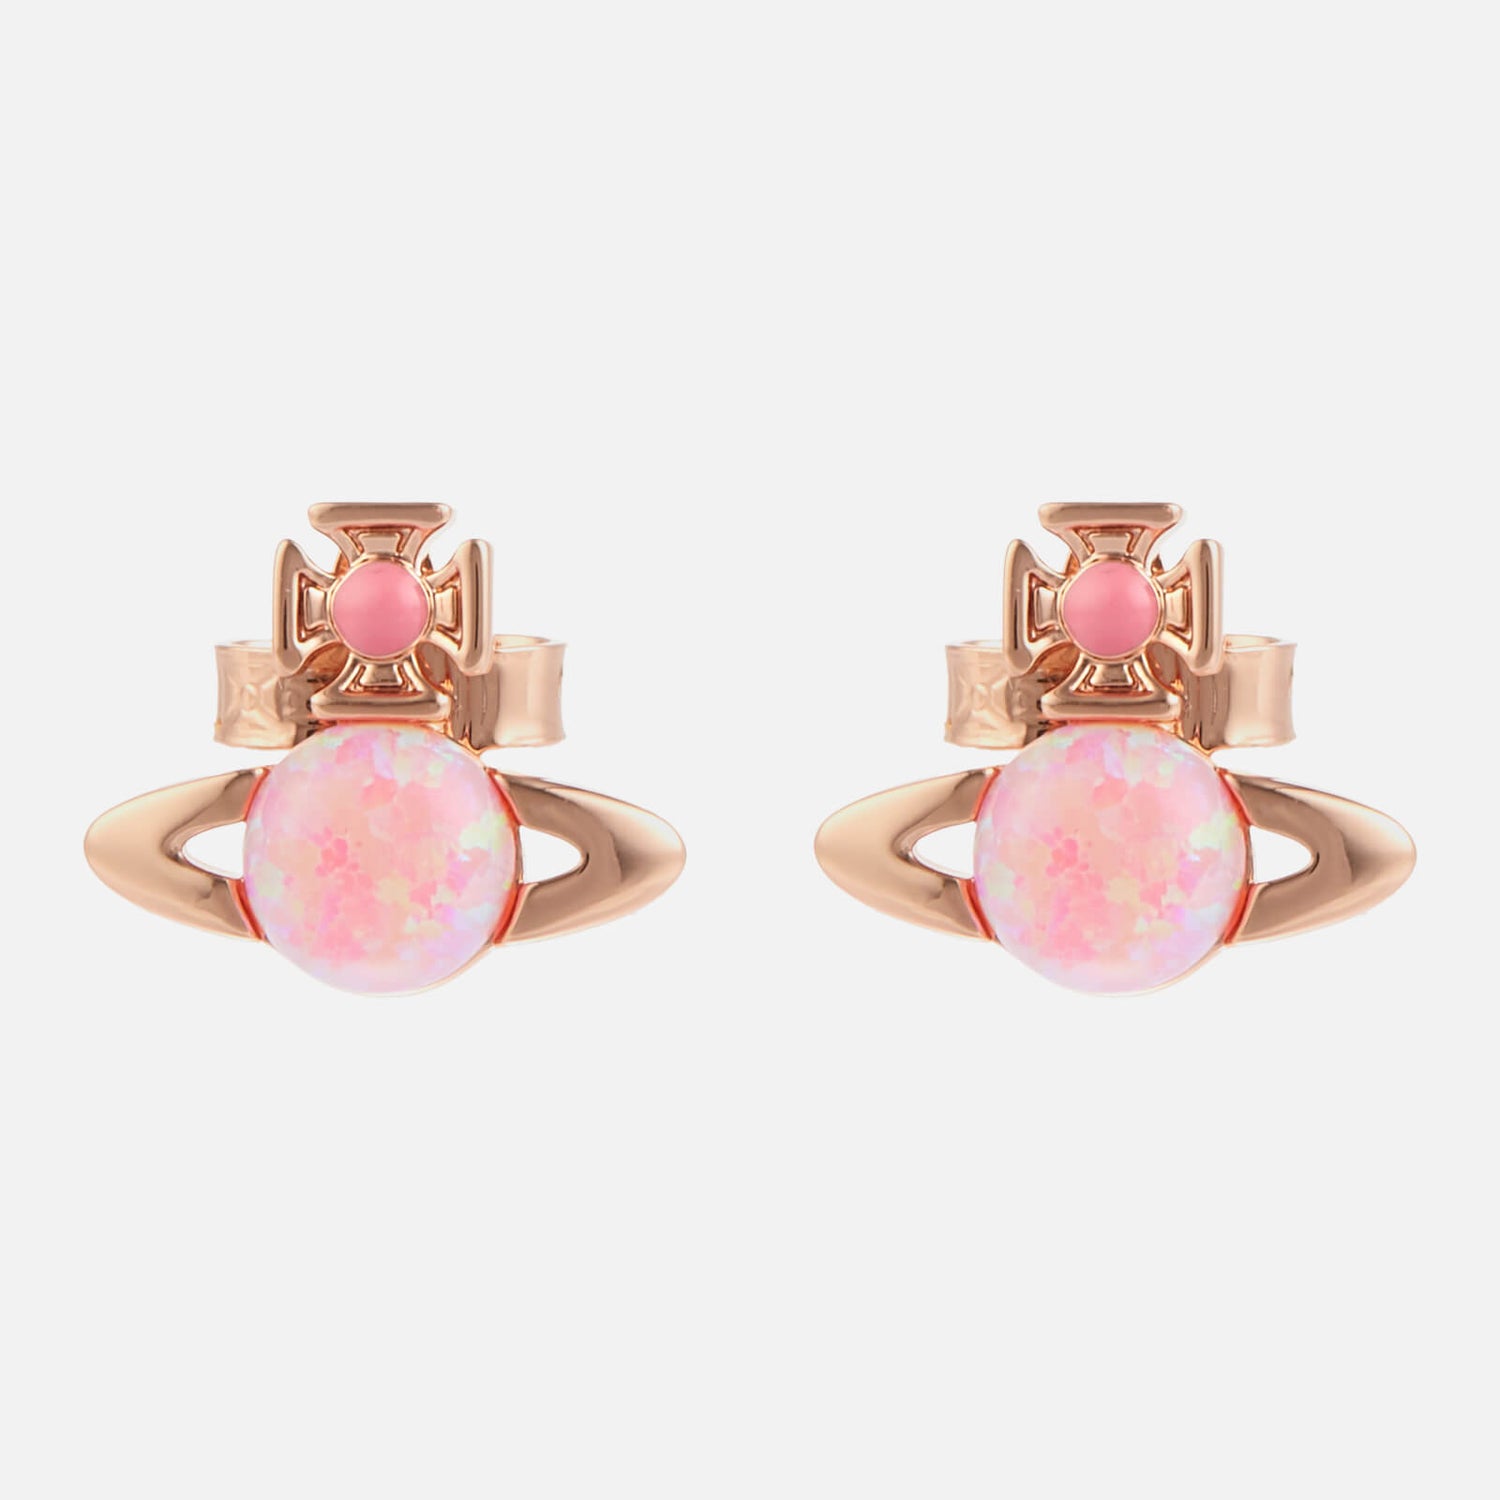 Vivienne Westwood Women's Isabelitta Bas Relief Earrings - Pink Gold Pink Pink